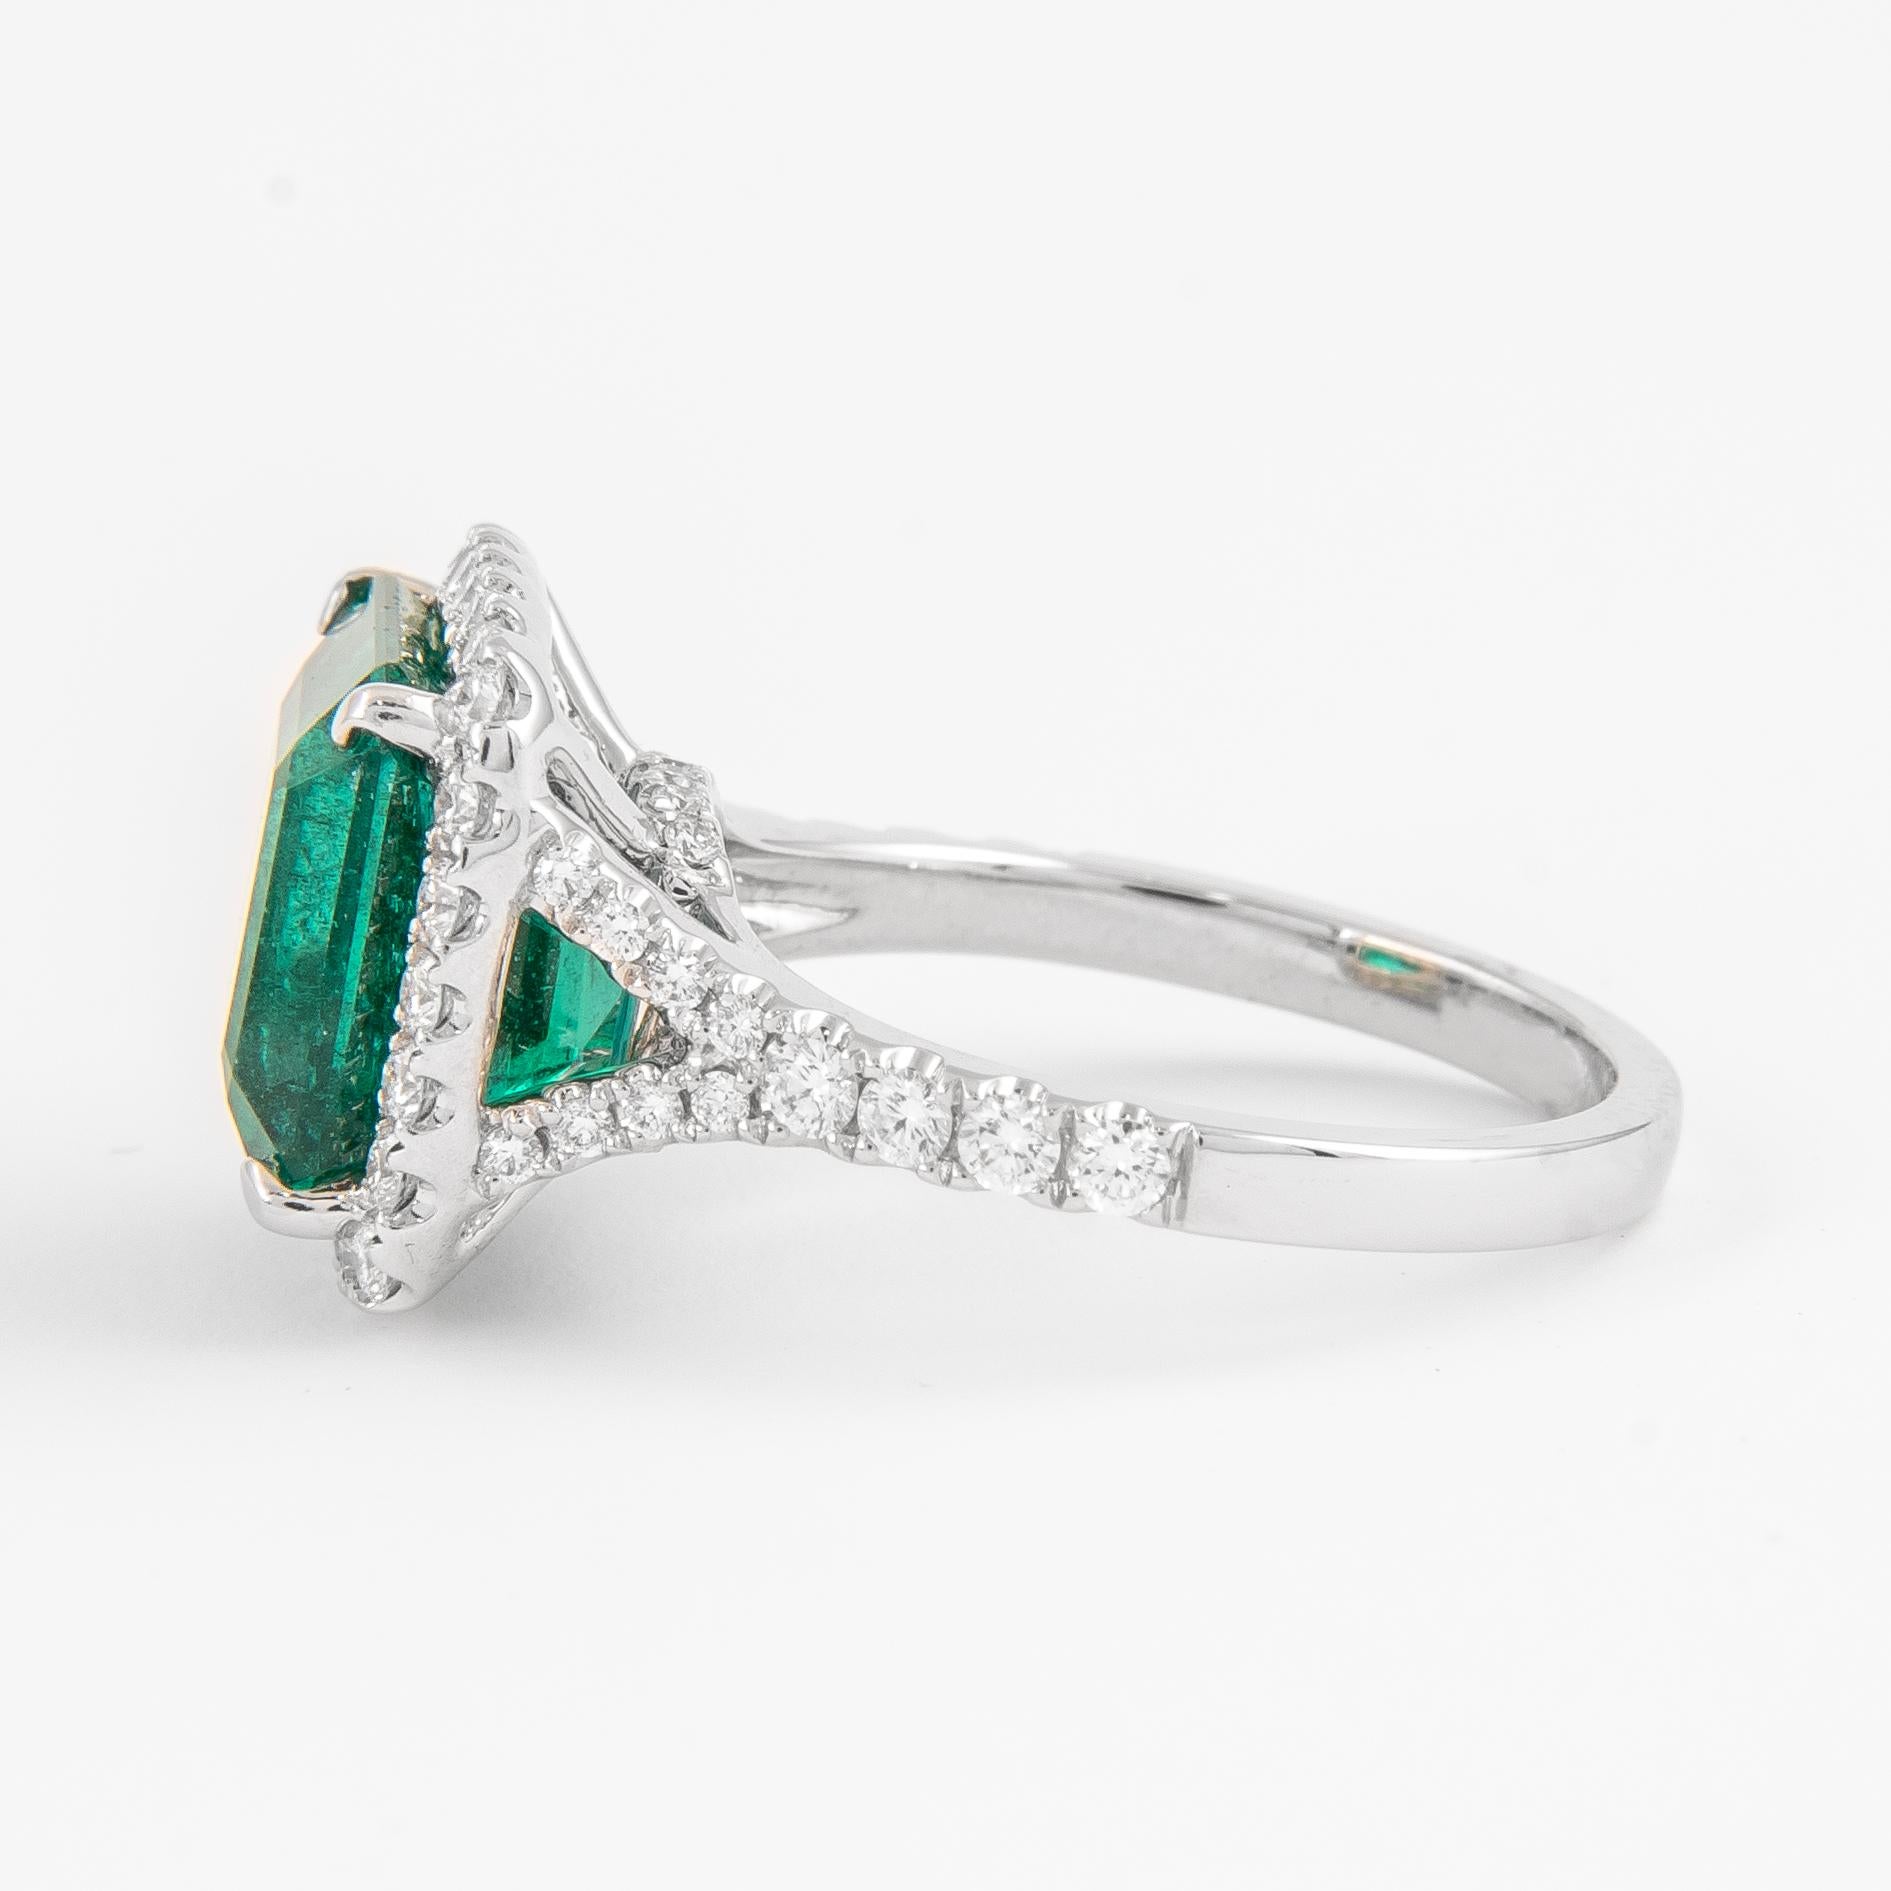 Emerald Cut Alexander GIA certified 5.21 Carat Emerald with Diamond Halo Ring 18 Karat Gold For Sale